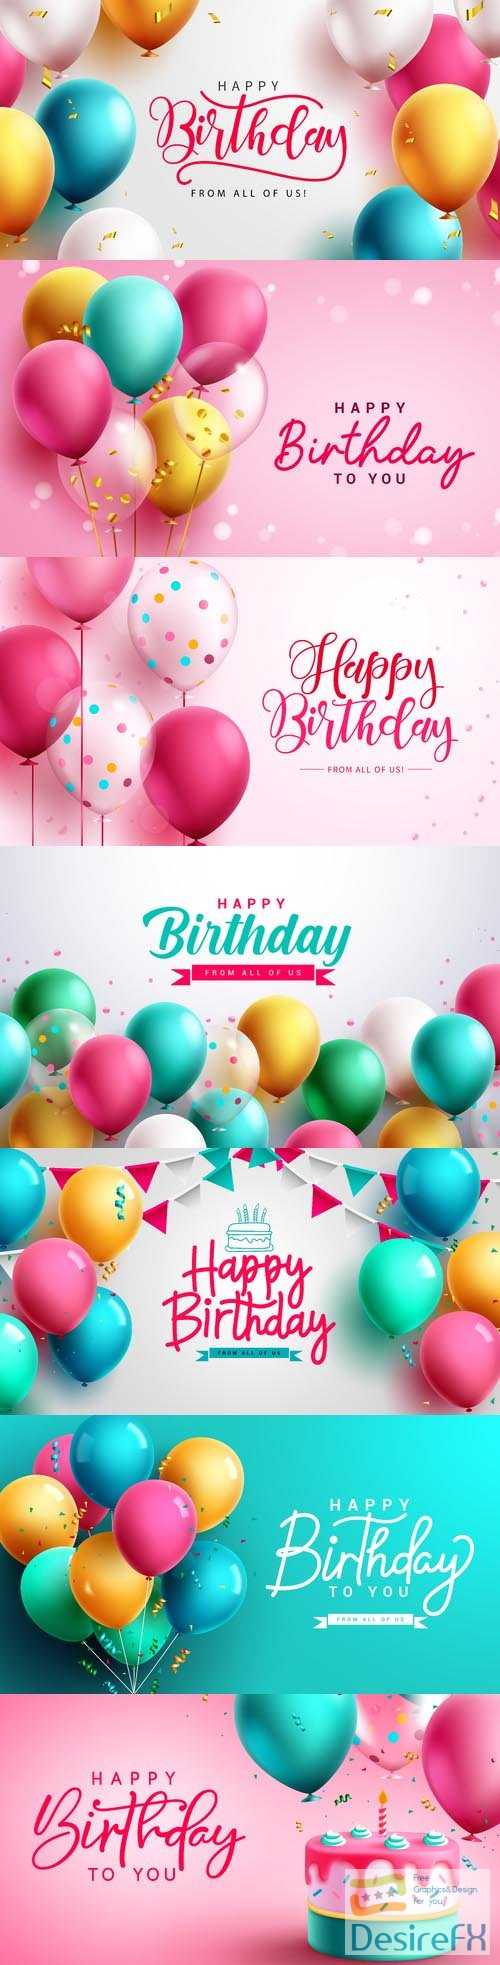 Happy birthday text vector design, birthday balloons party elements decoration